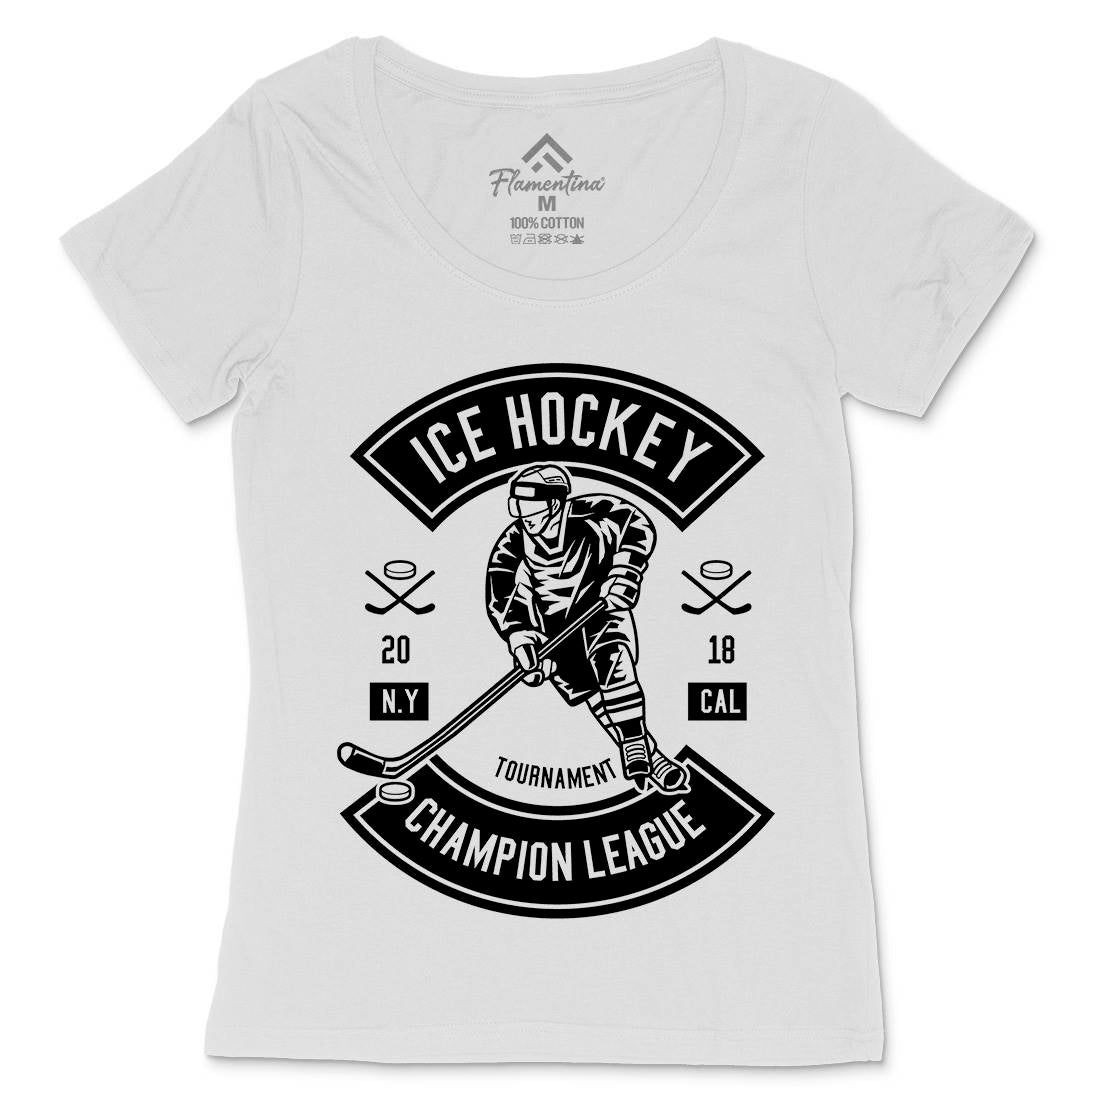 Ice Hockey Champion League Womens Scoop Neck T-Shirt Sport B564